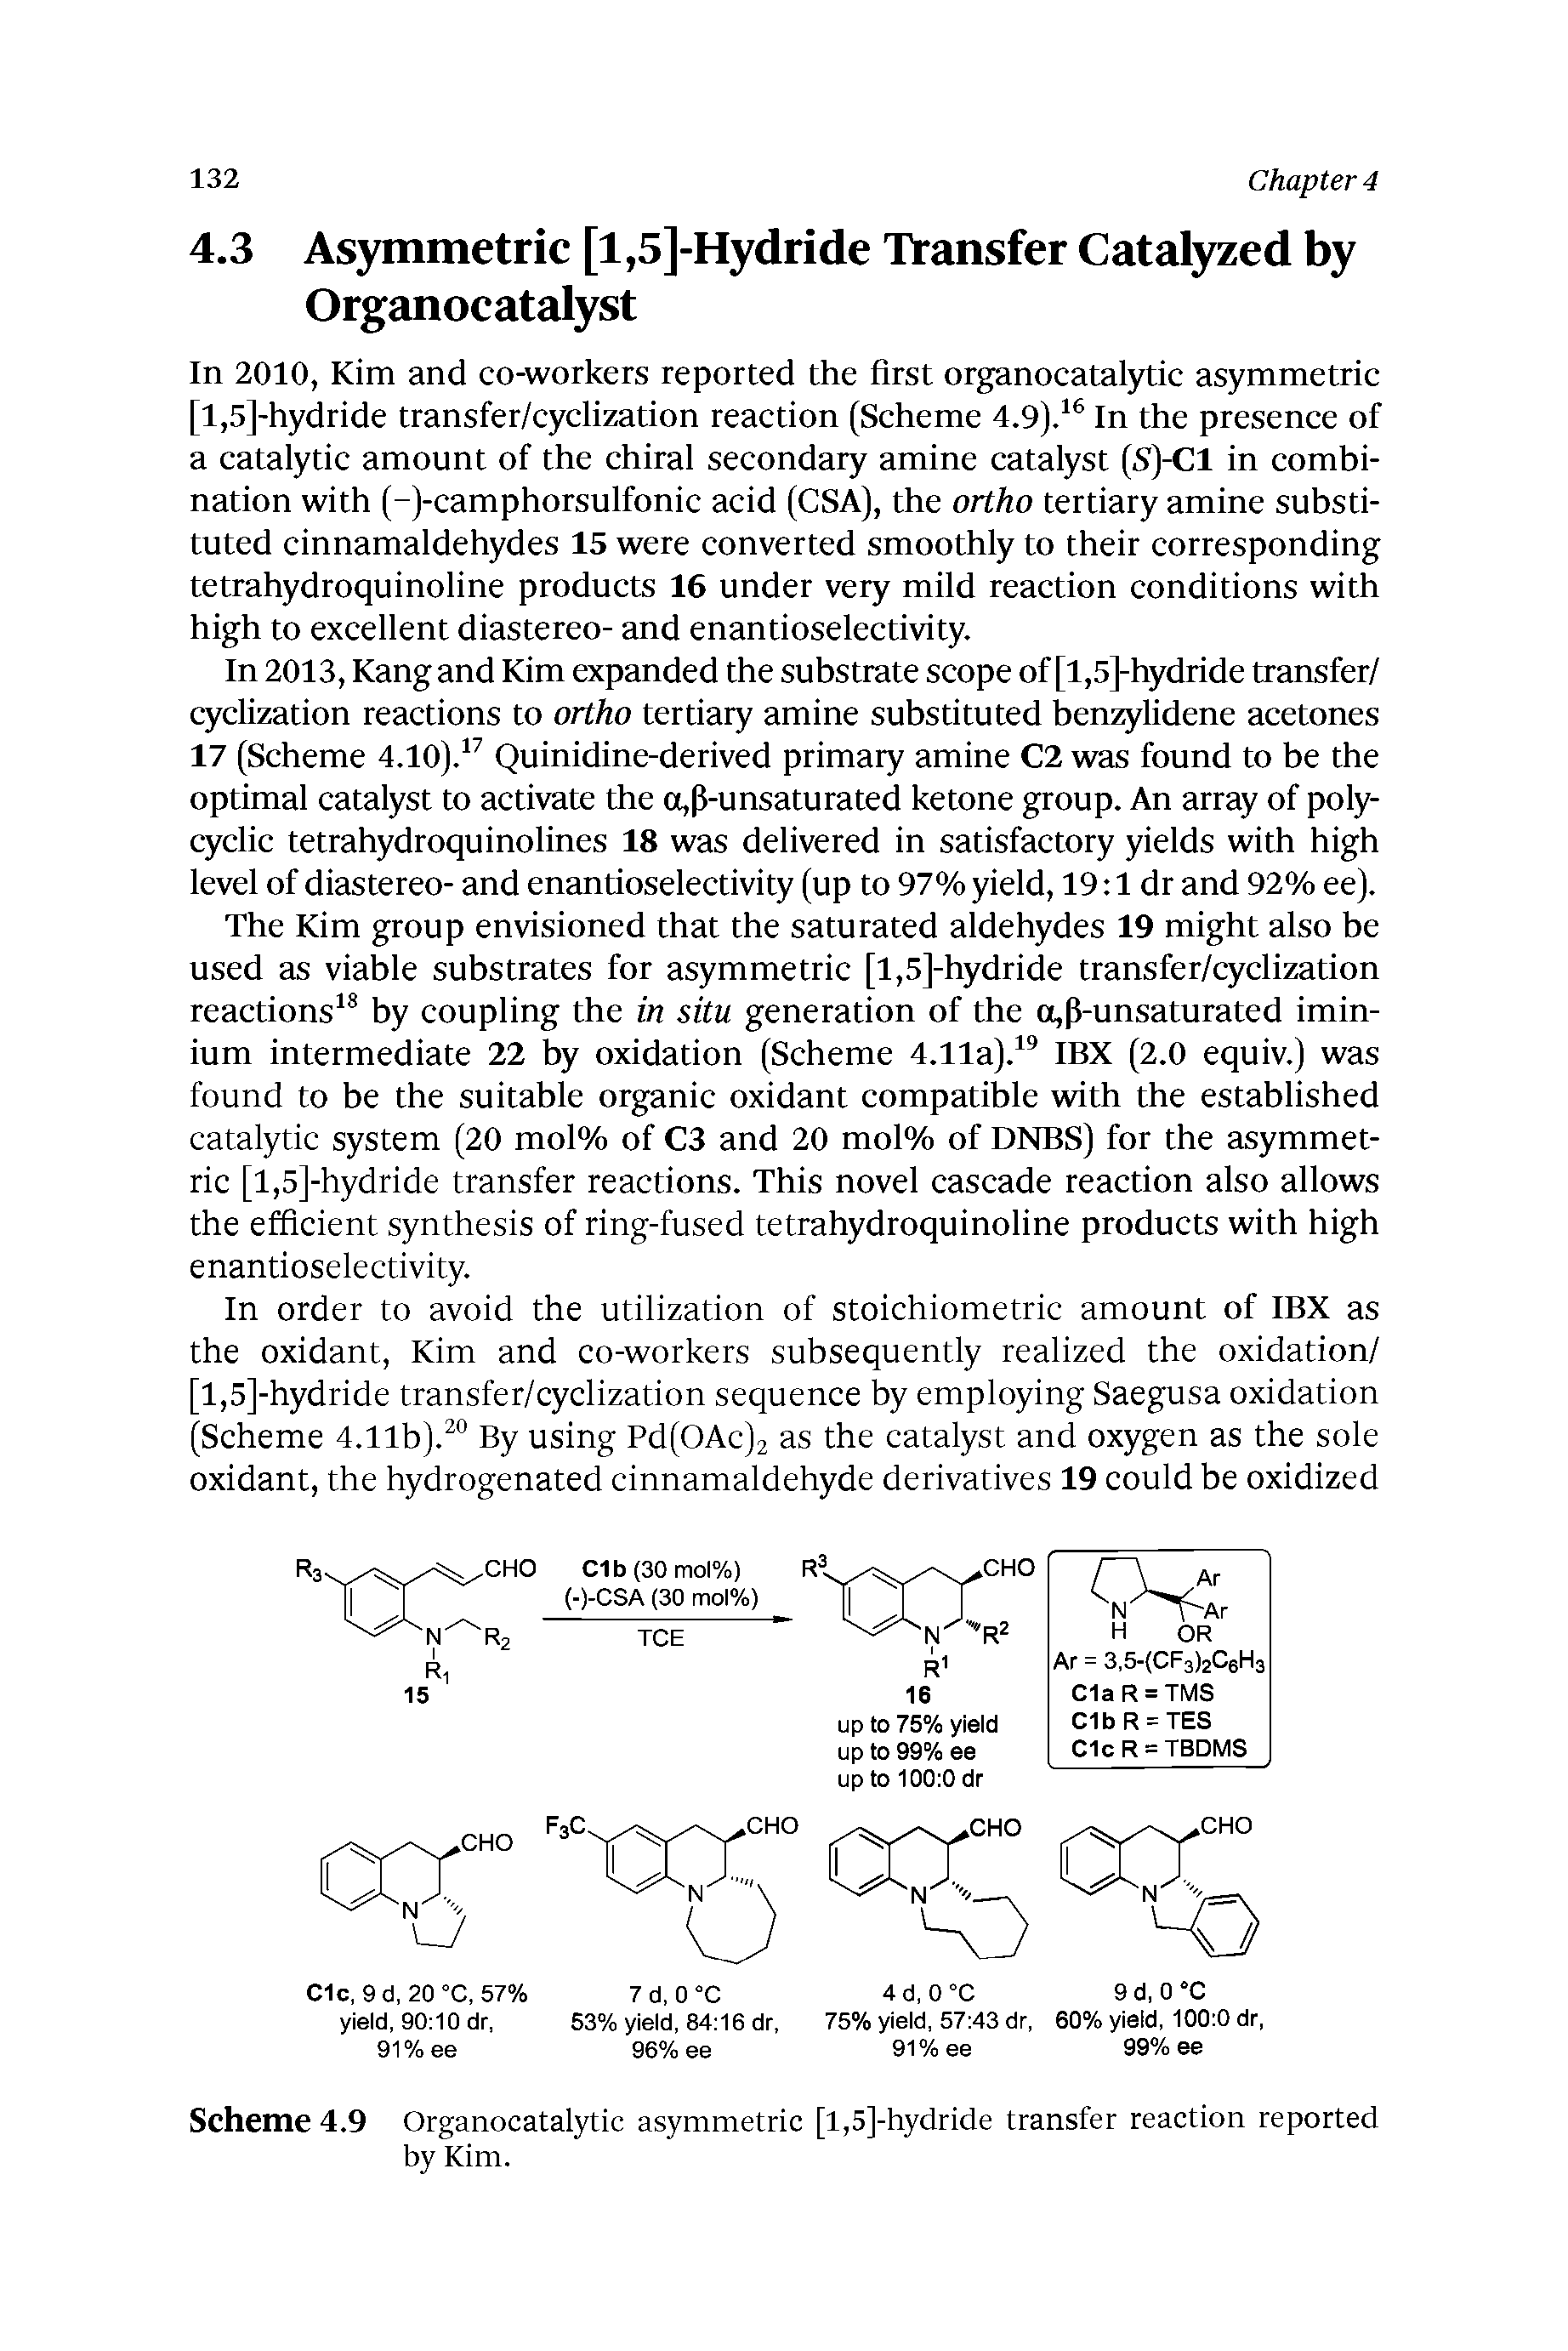 Scheme 4.9 Organoeatalytic asymmetric [l,5]-hydride transfer reaction reported by Kim.